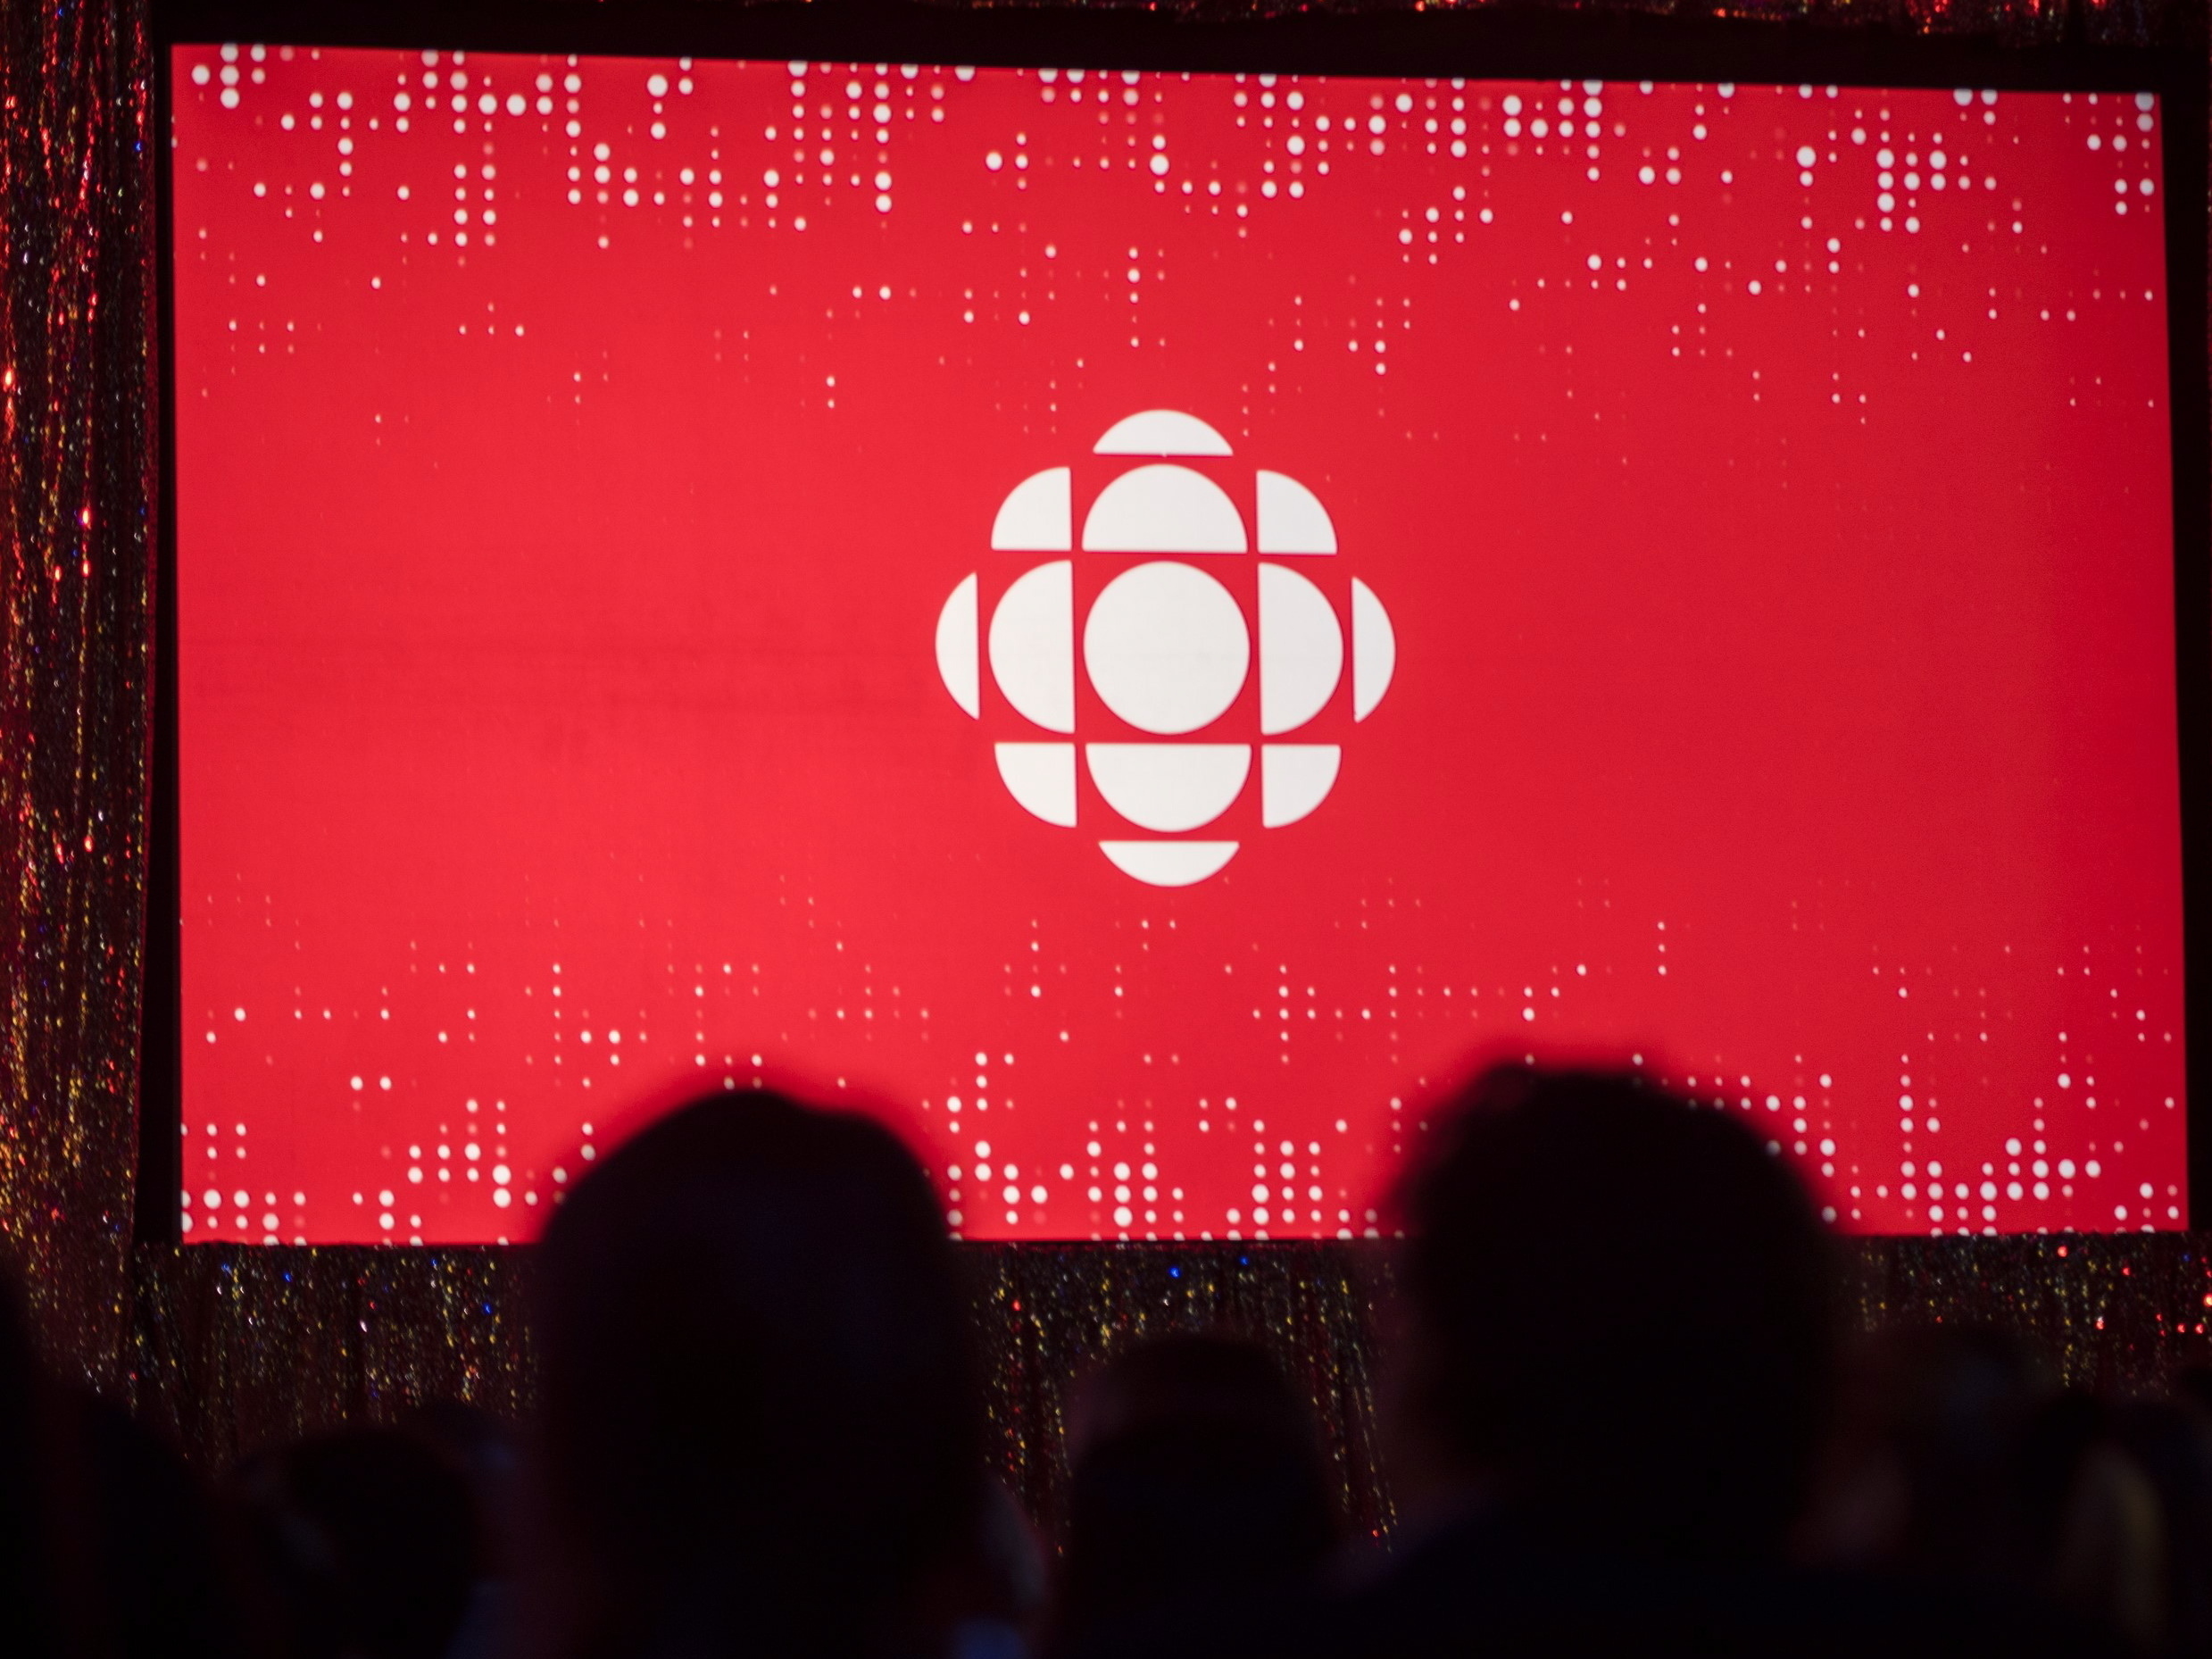 the CBC logo